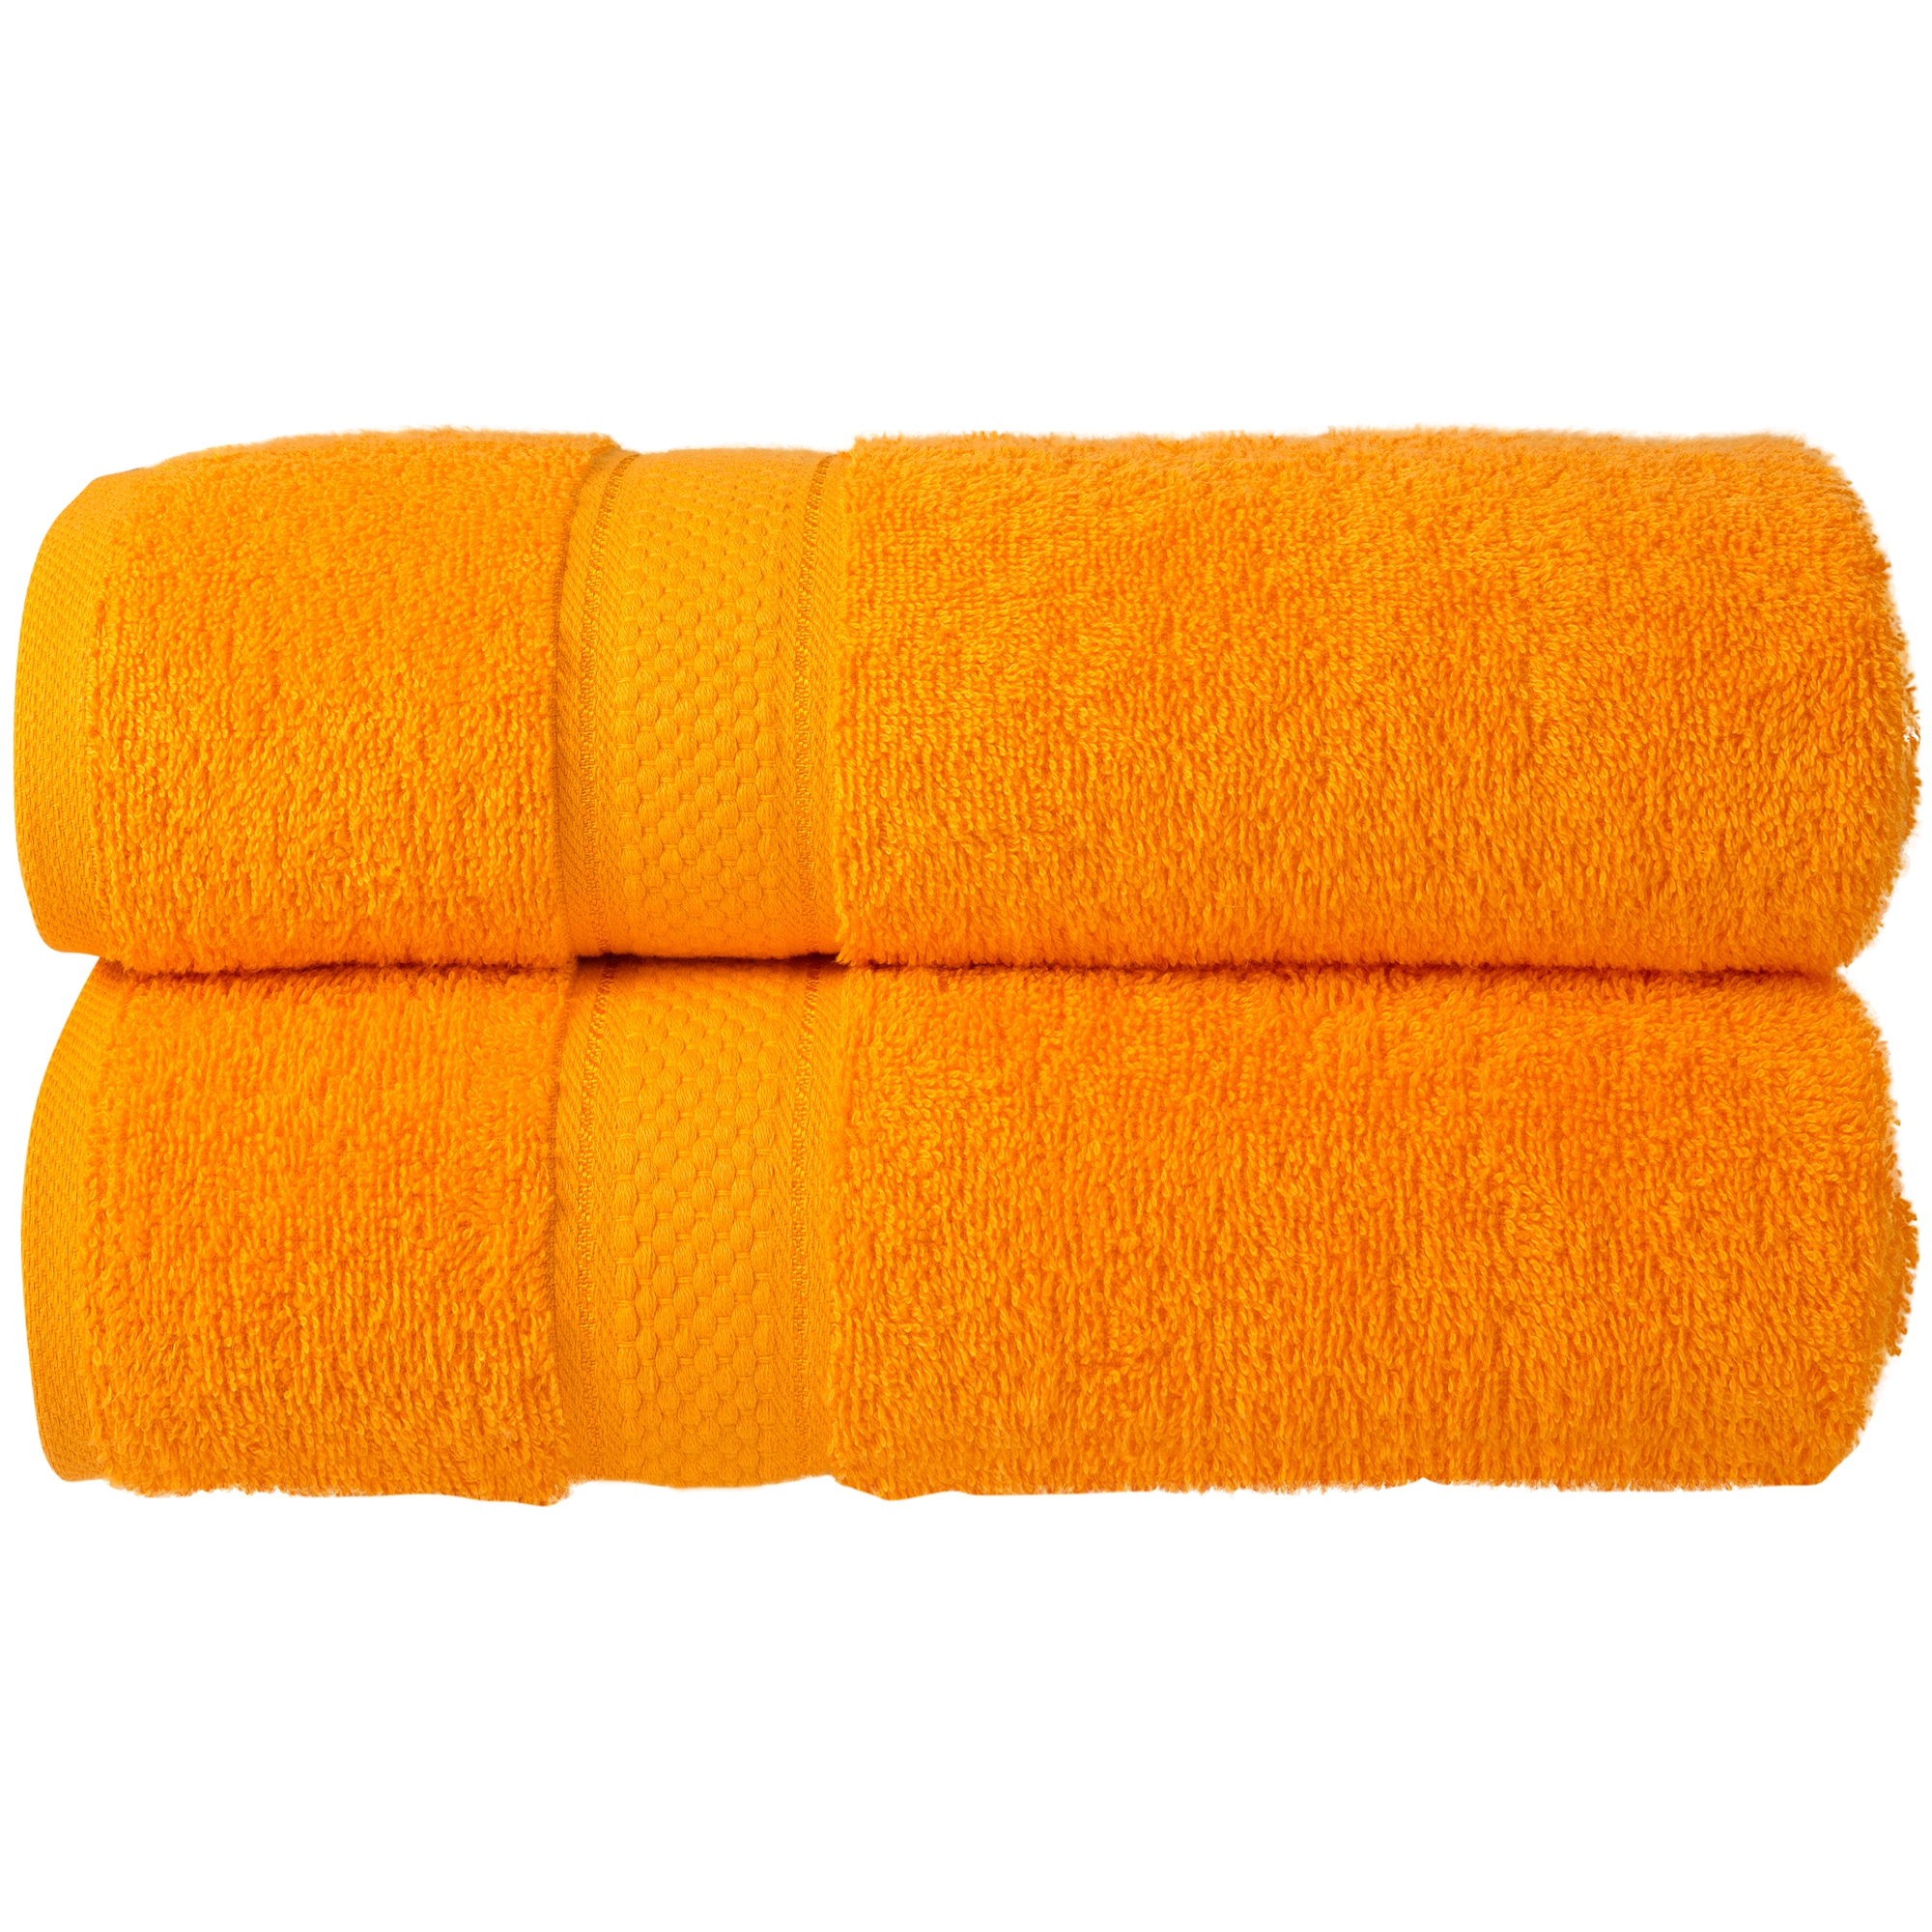 Bath Towels Set of 4 Premium Cotton Burgundy Towels 500 GSM Todd Linens Bath Towel Set Pack of 4 Soft and Absorbent